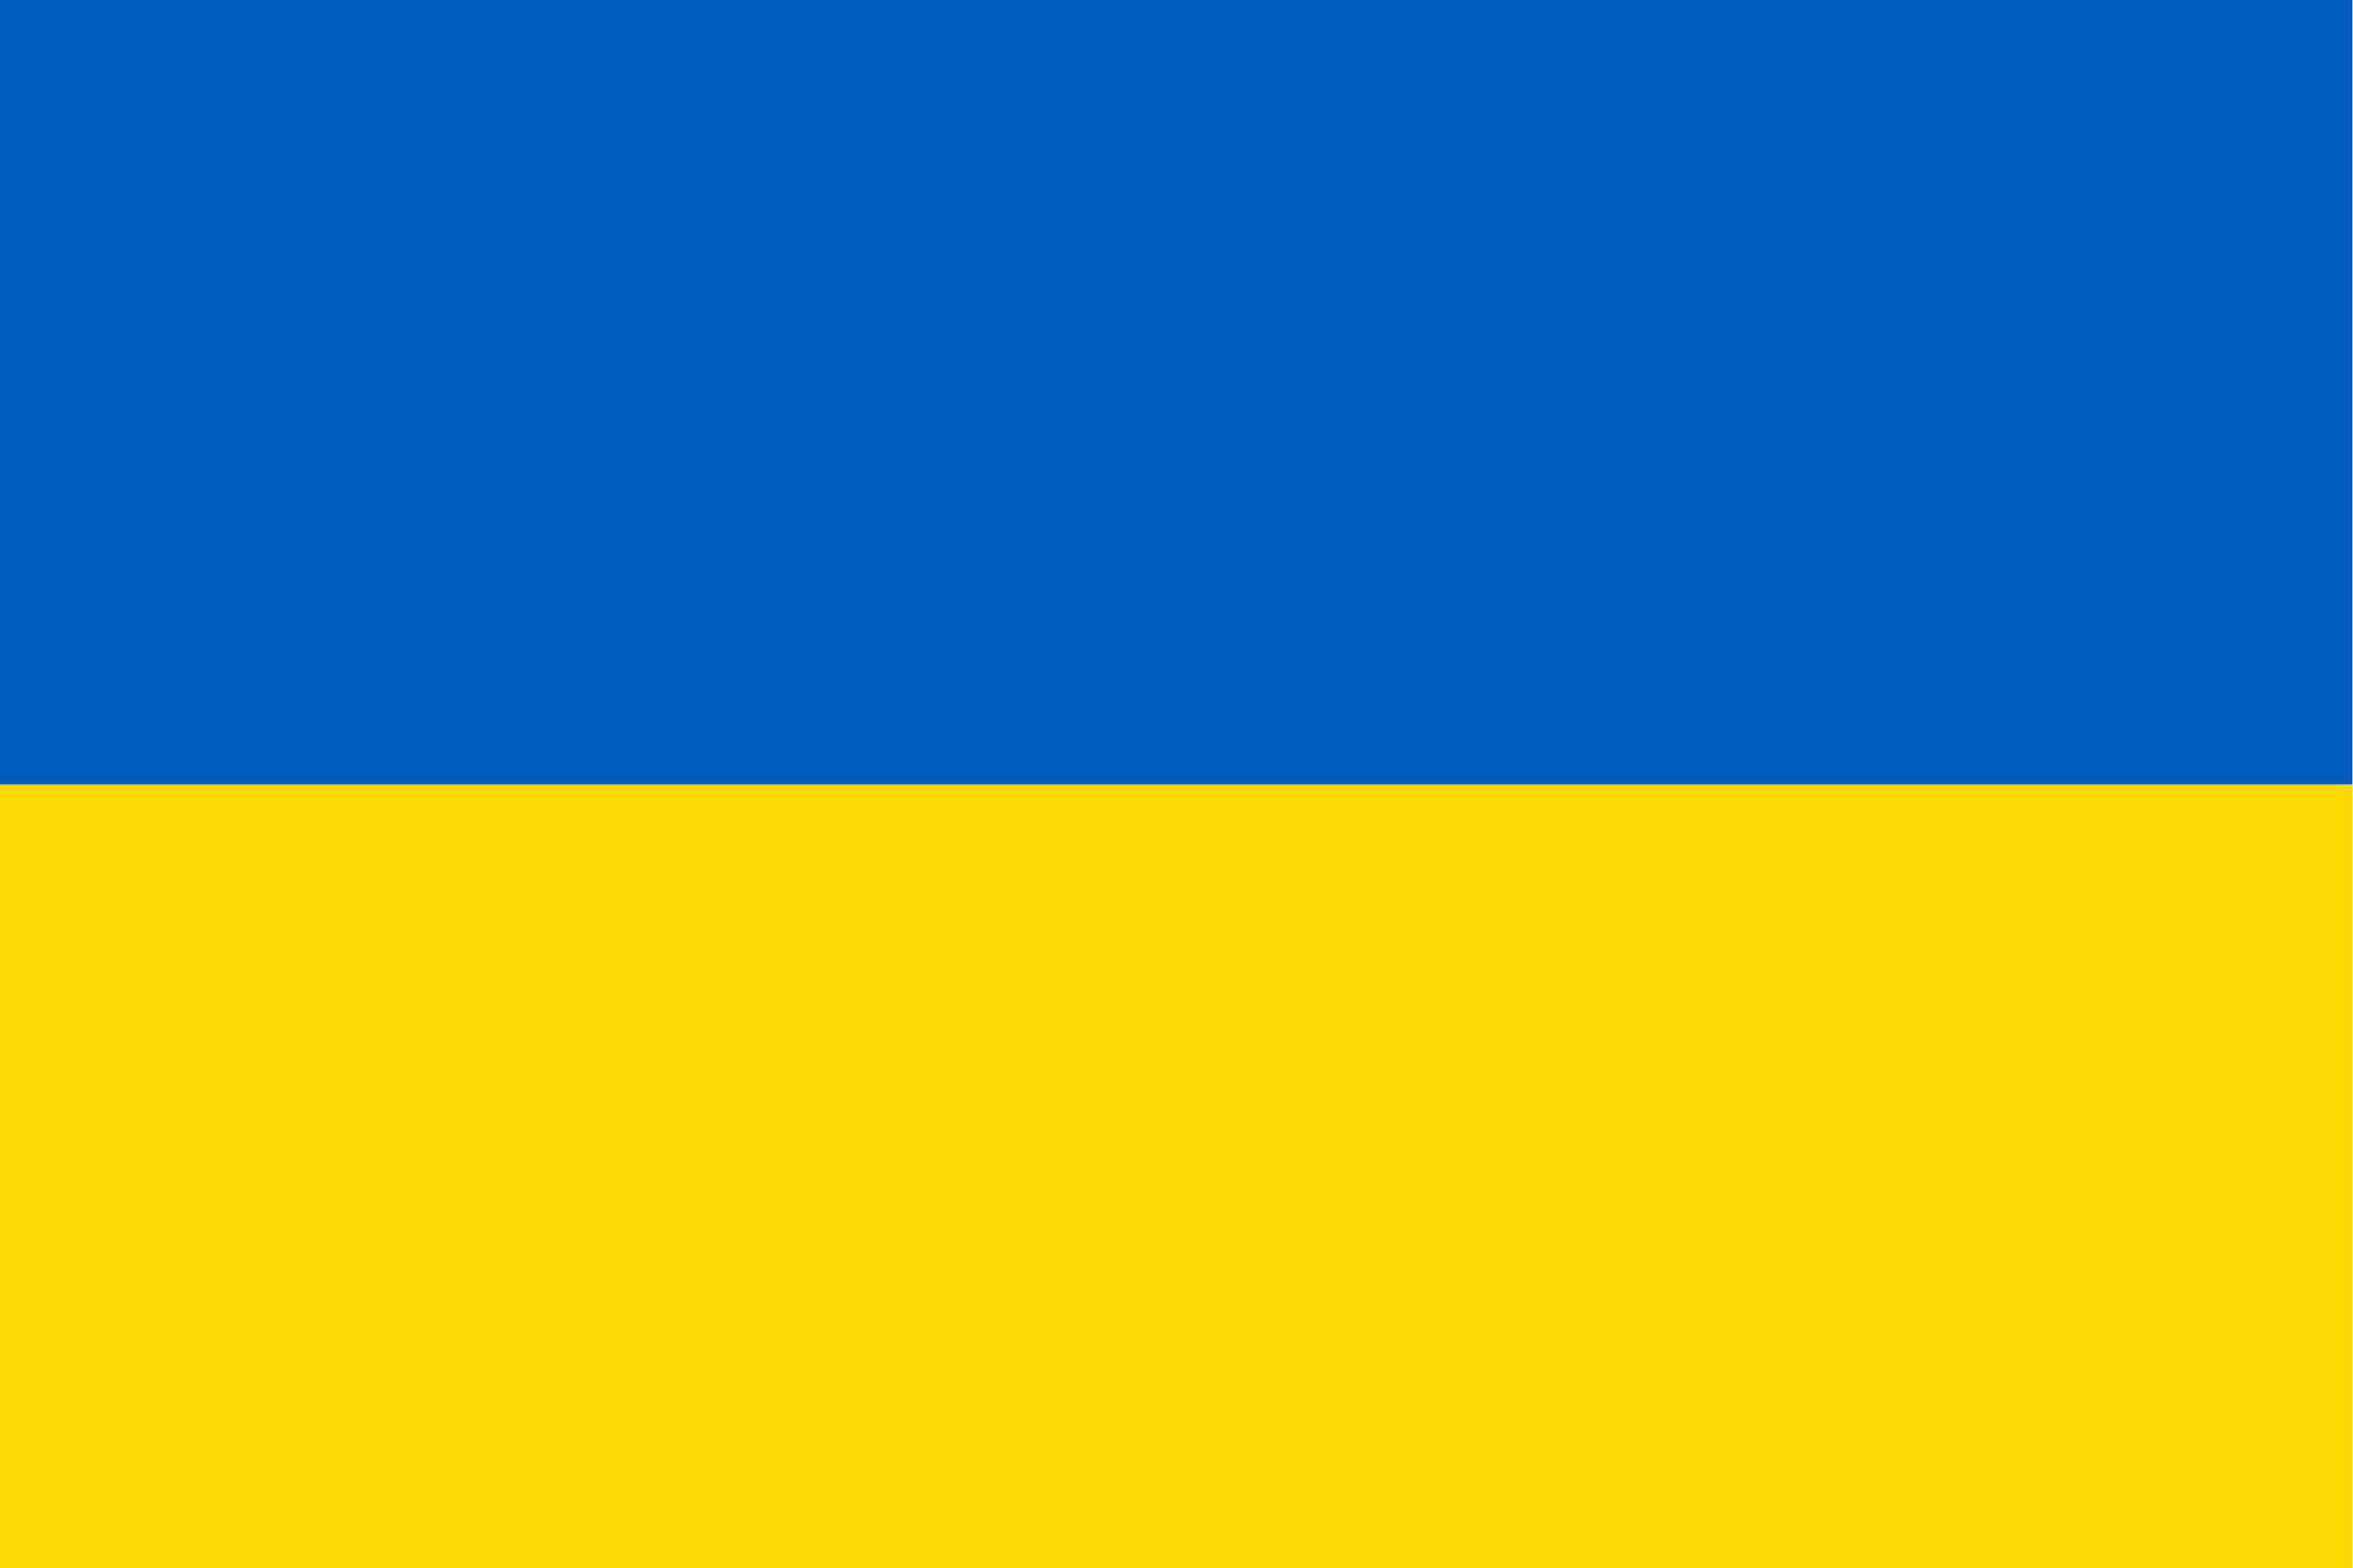 NFT Painters Relief For Ukraine